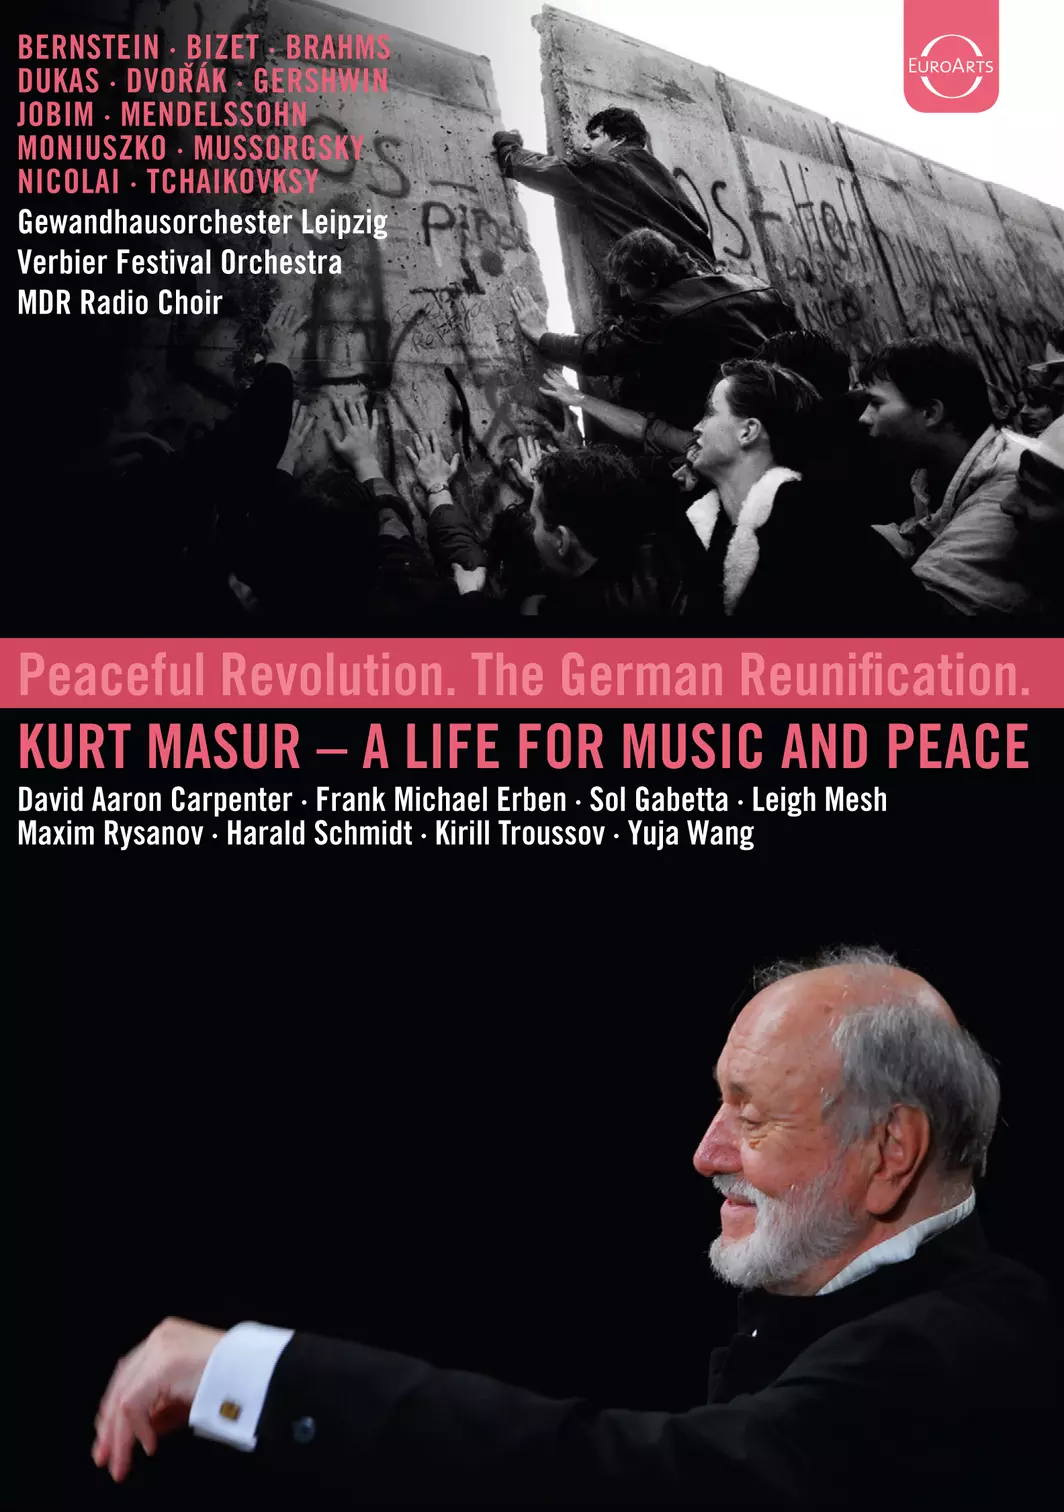 Kurt Masur - A Life for Music and Peace